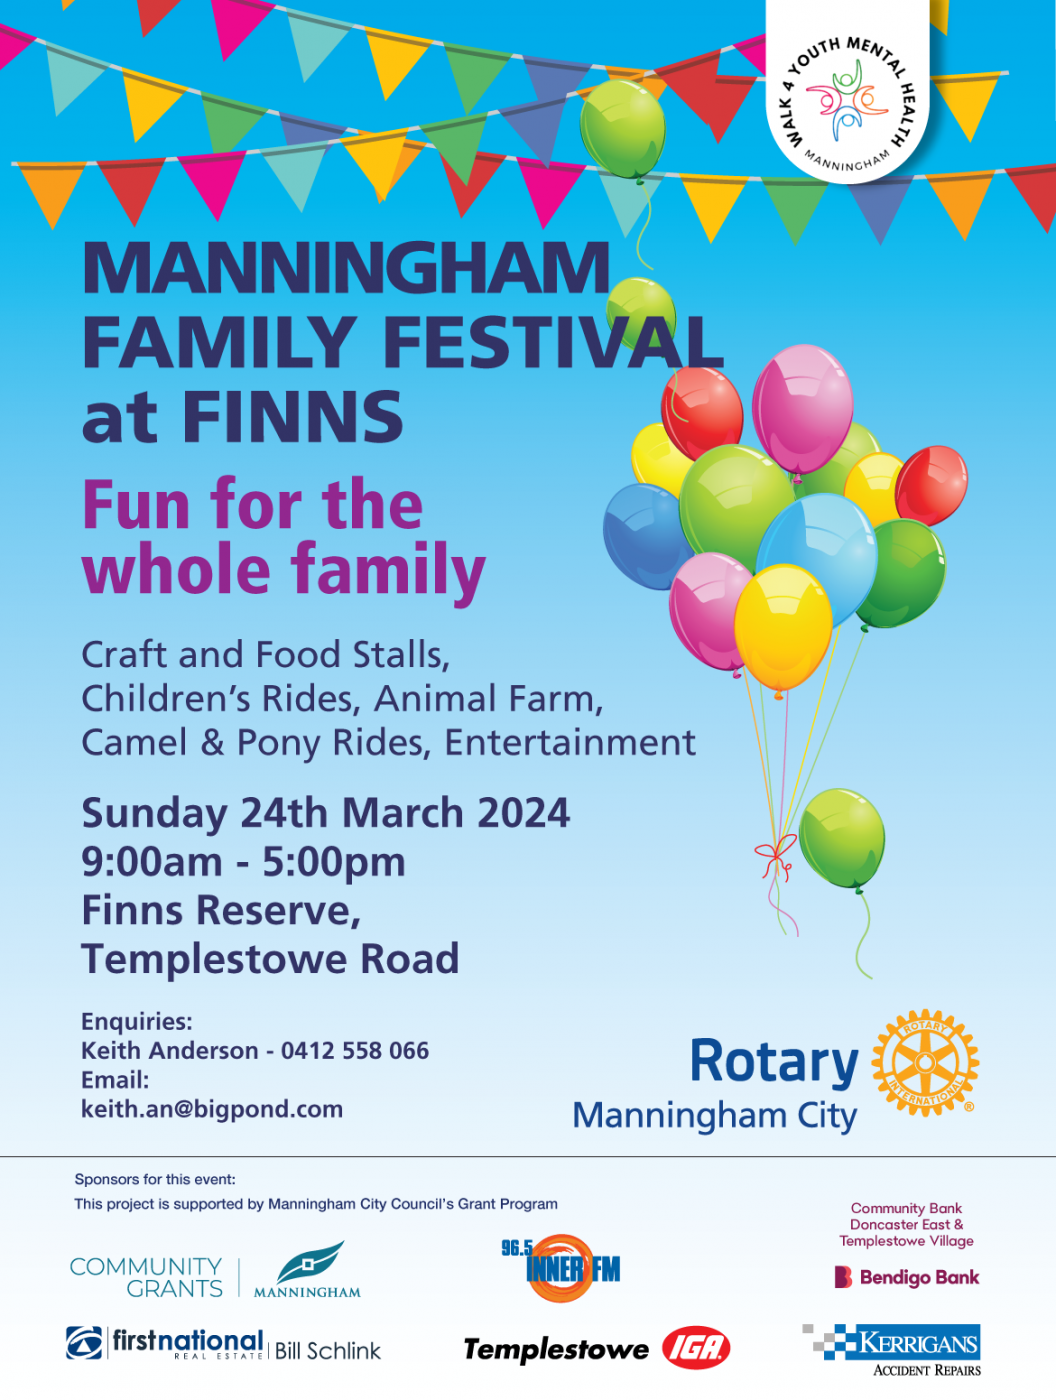 Manningham Family Festival & Walk 4 Youth Mental Health